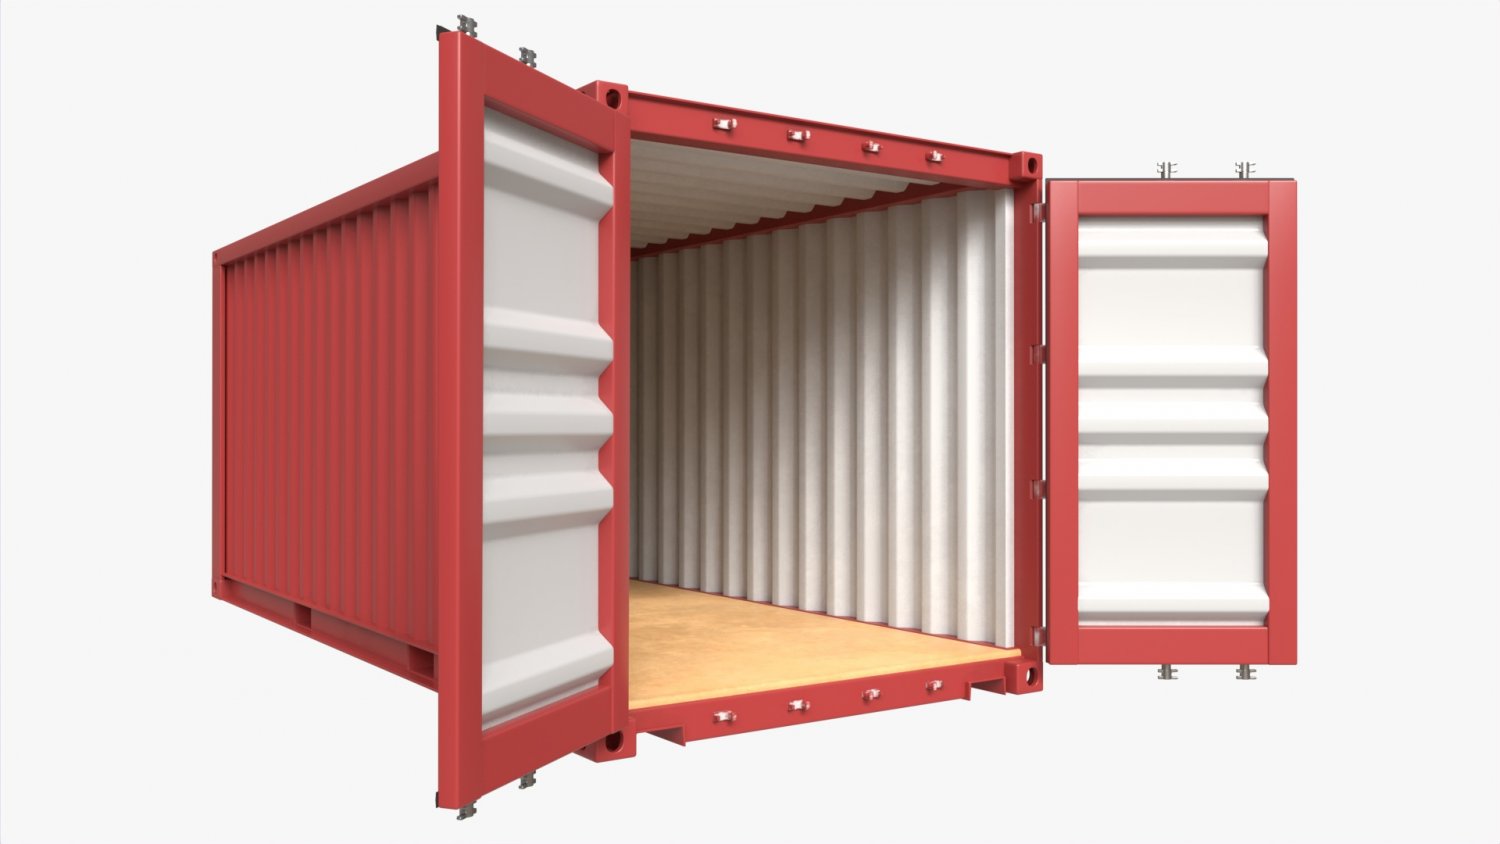 Cargo Container 40 feet long 3D Model $28 - .max .fbx .obj - Free3D